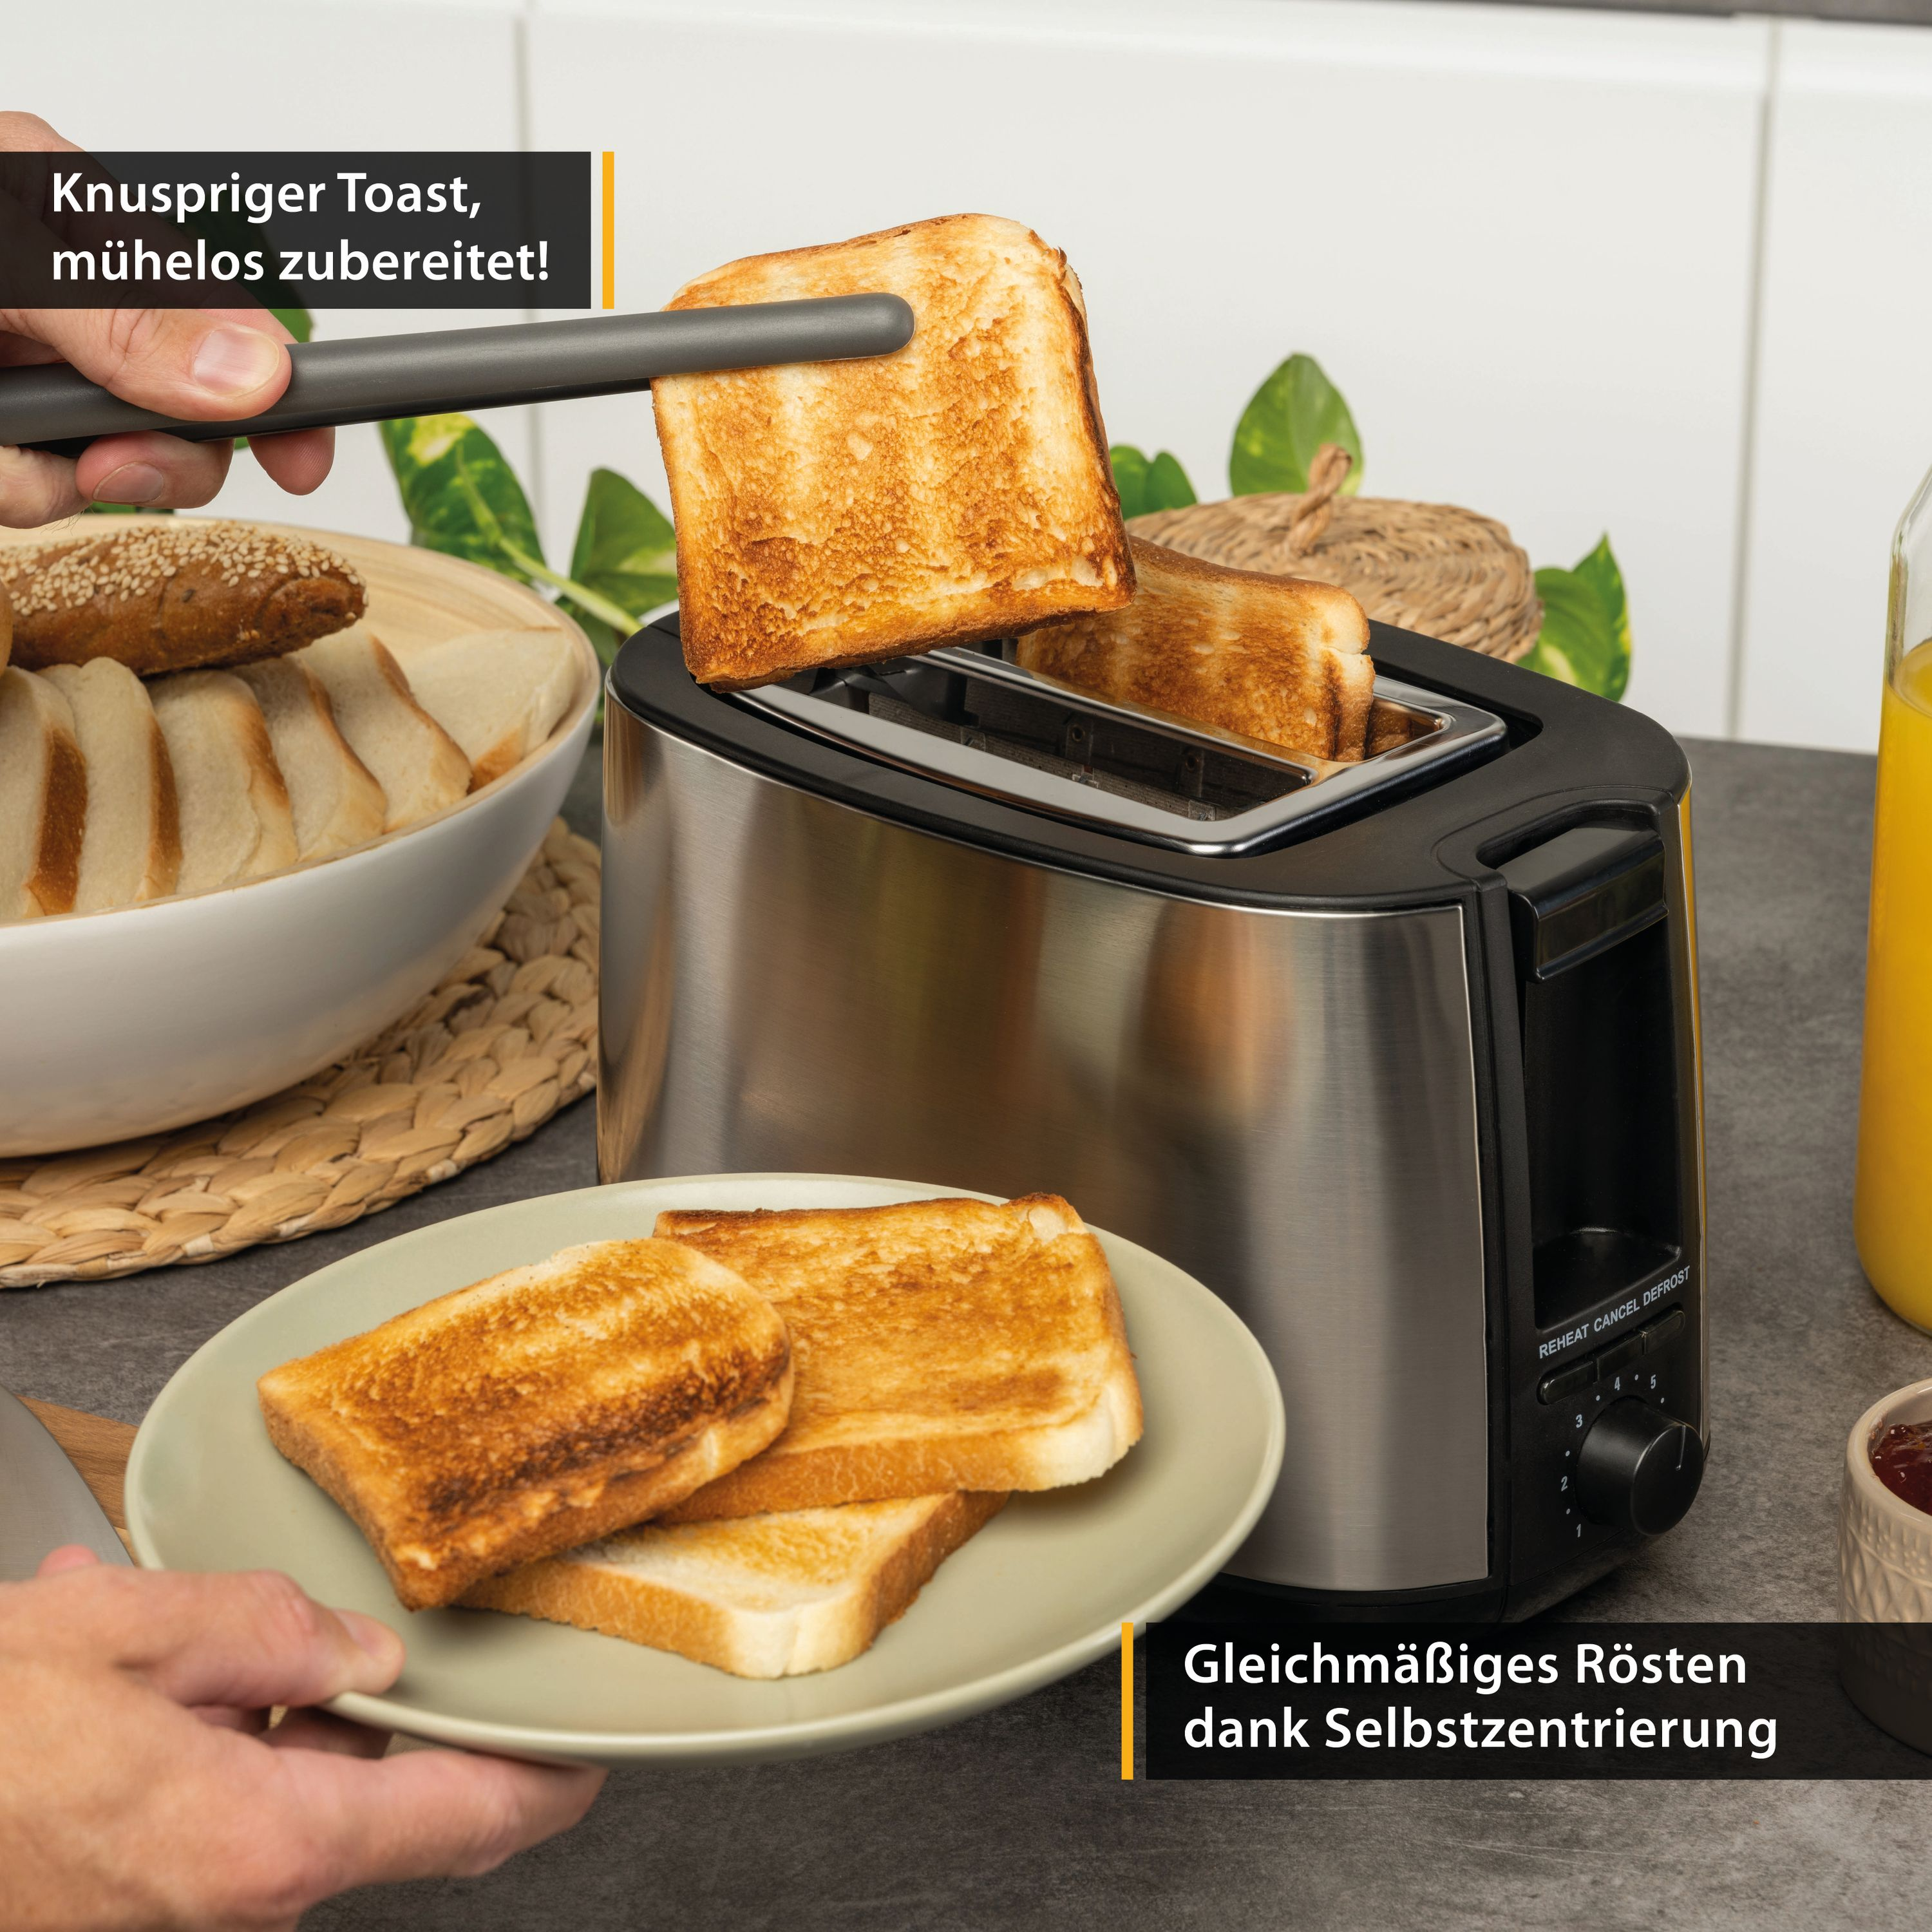 TZS FIRST AUSTRIA Toaster Watt, Schlitze: (750 2) 50 FA-5369-4